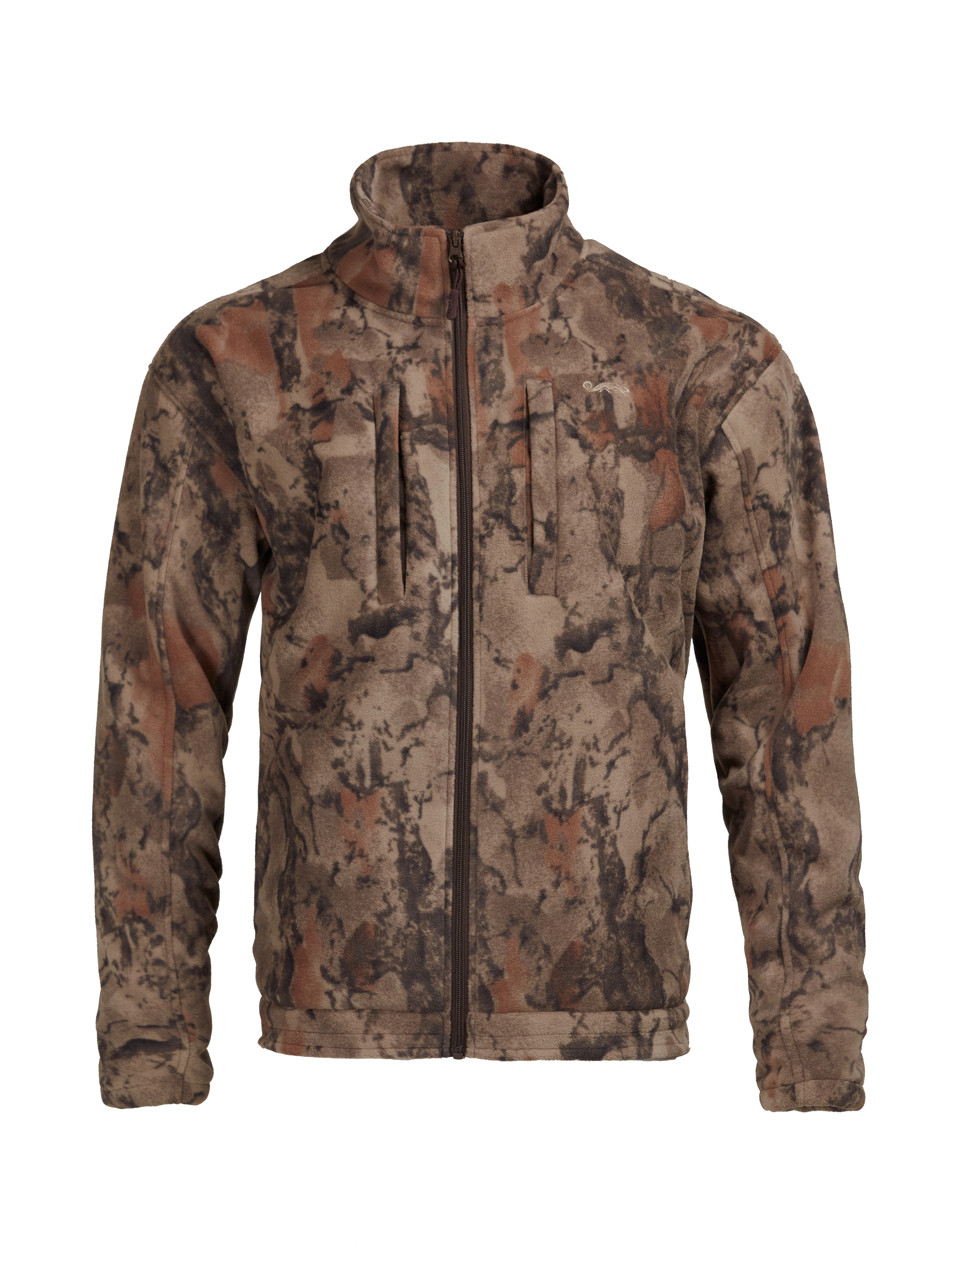 Buy Jacket Para Full Sleeve Camouflage Men Bomber jacket Military Print Winter  Jacket Sport Warm Reversibile Outdoor Adventure Jacket Coats (S) at  Amazon.in